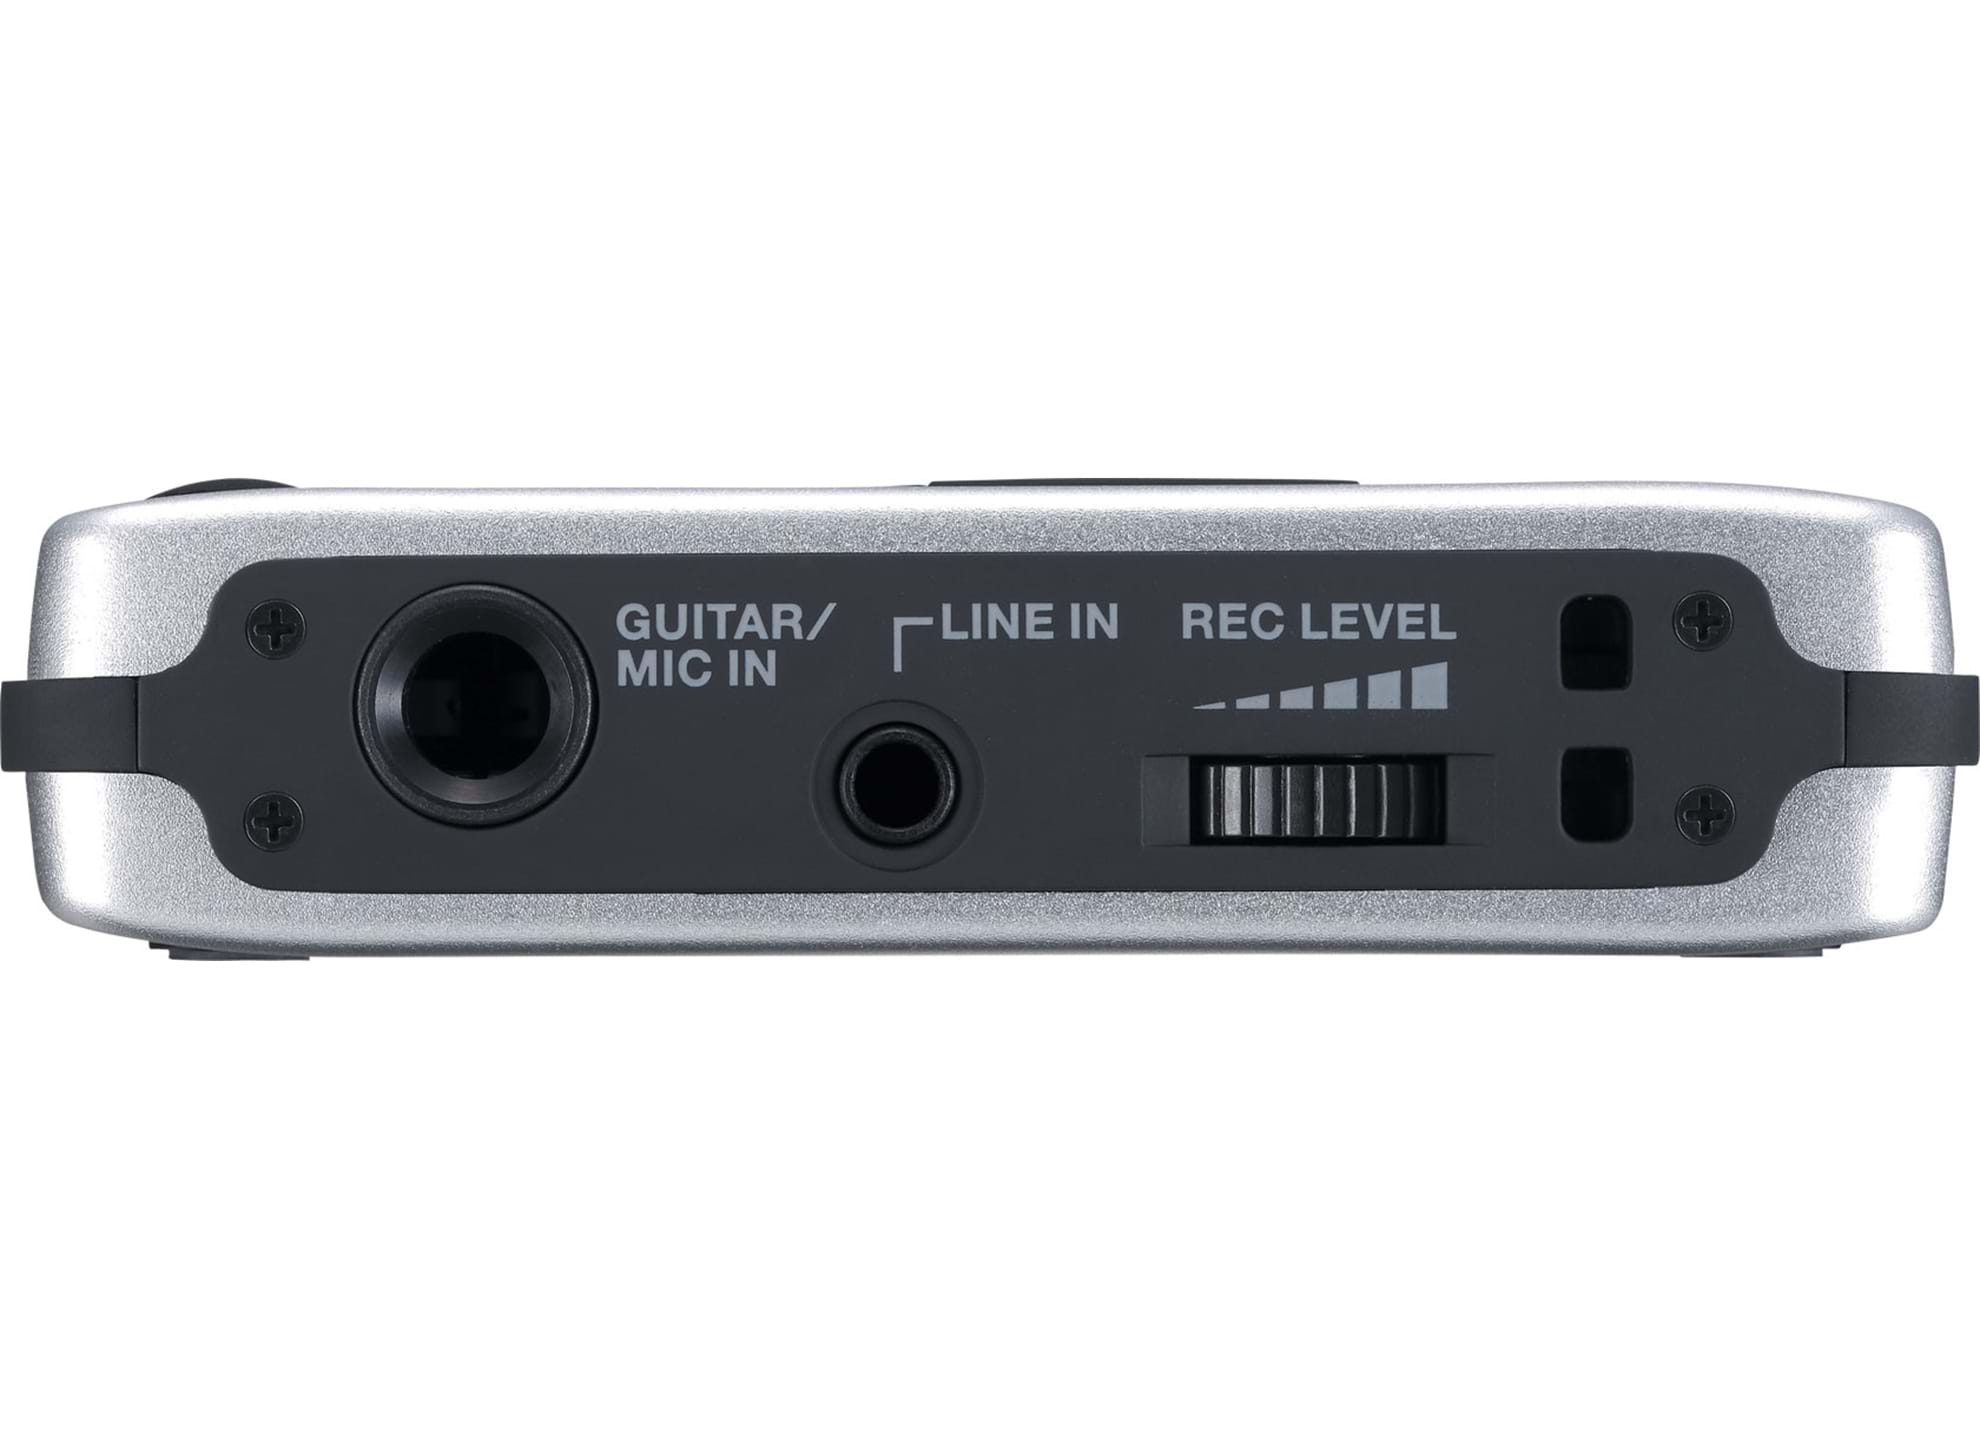 Micro BR-80 Digital Recorder